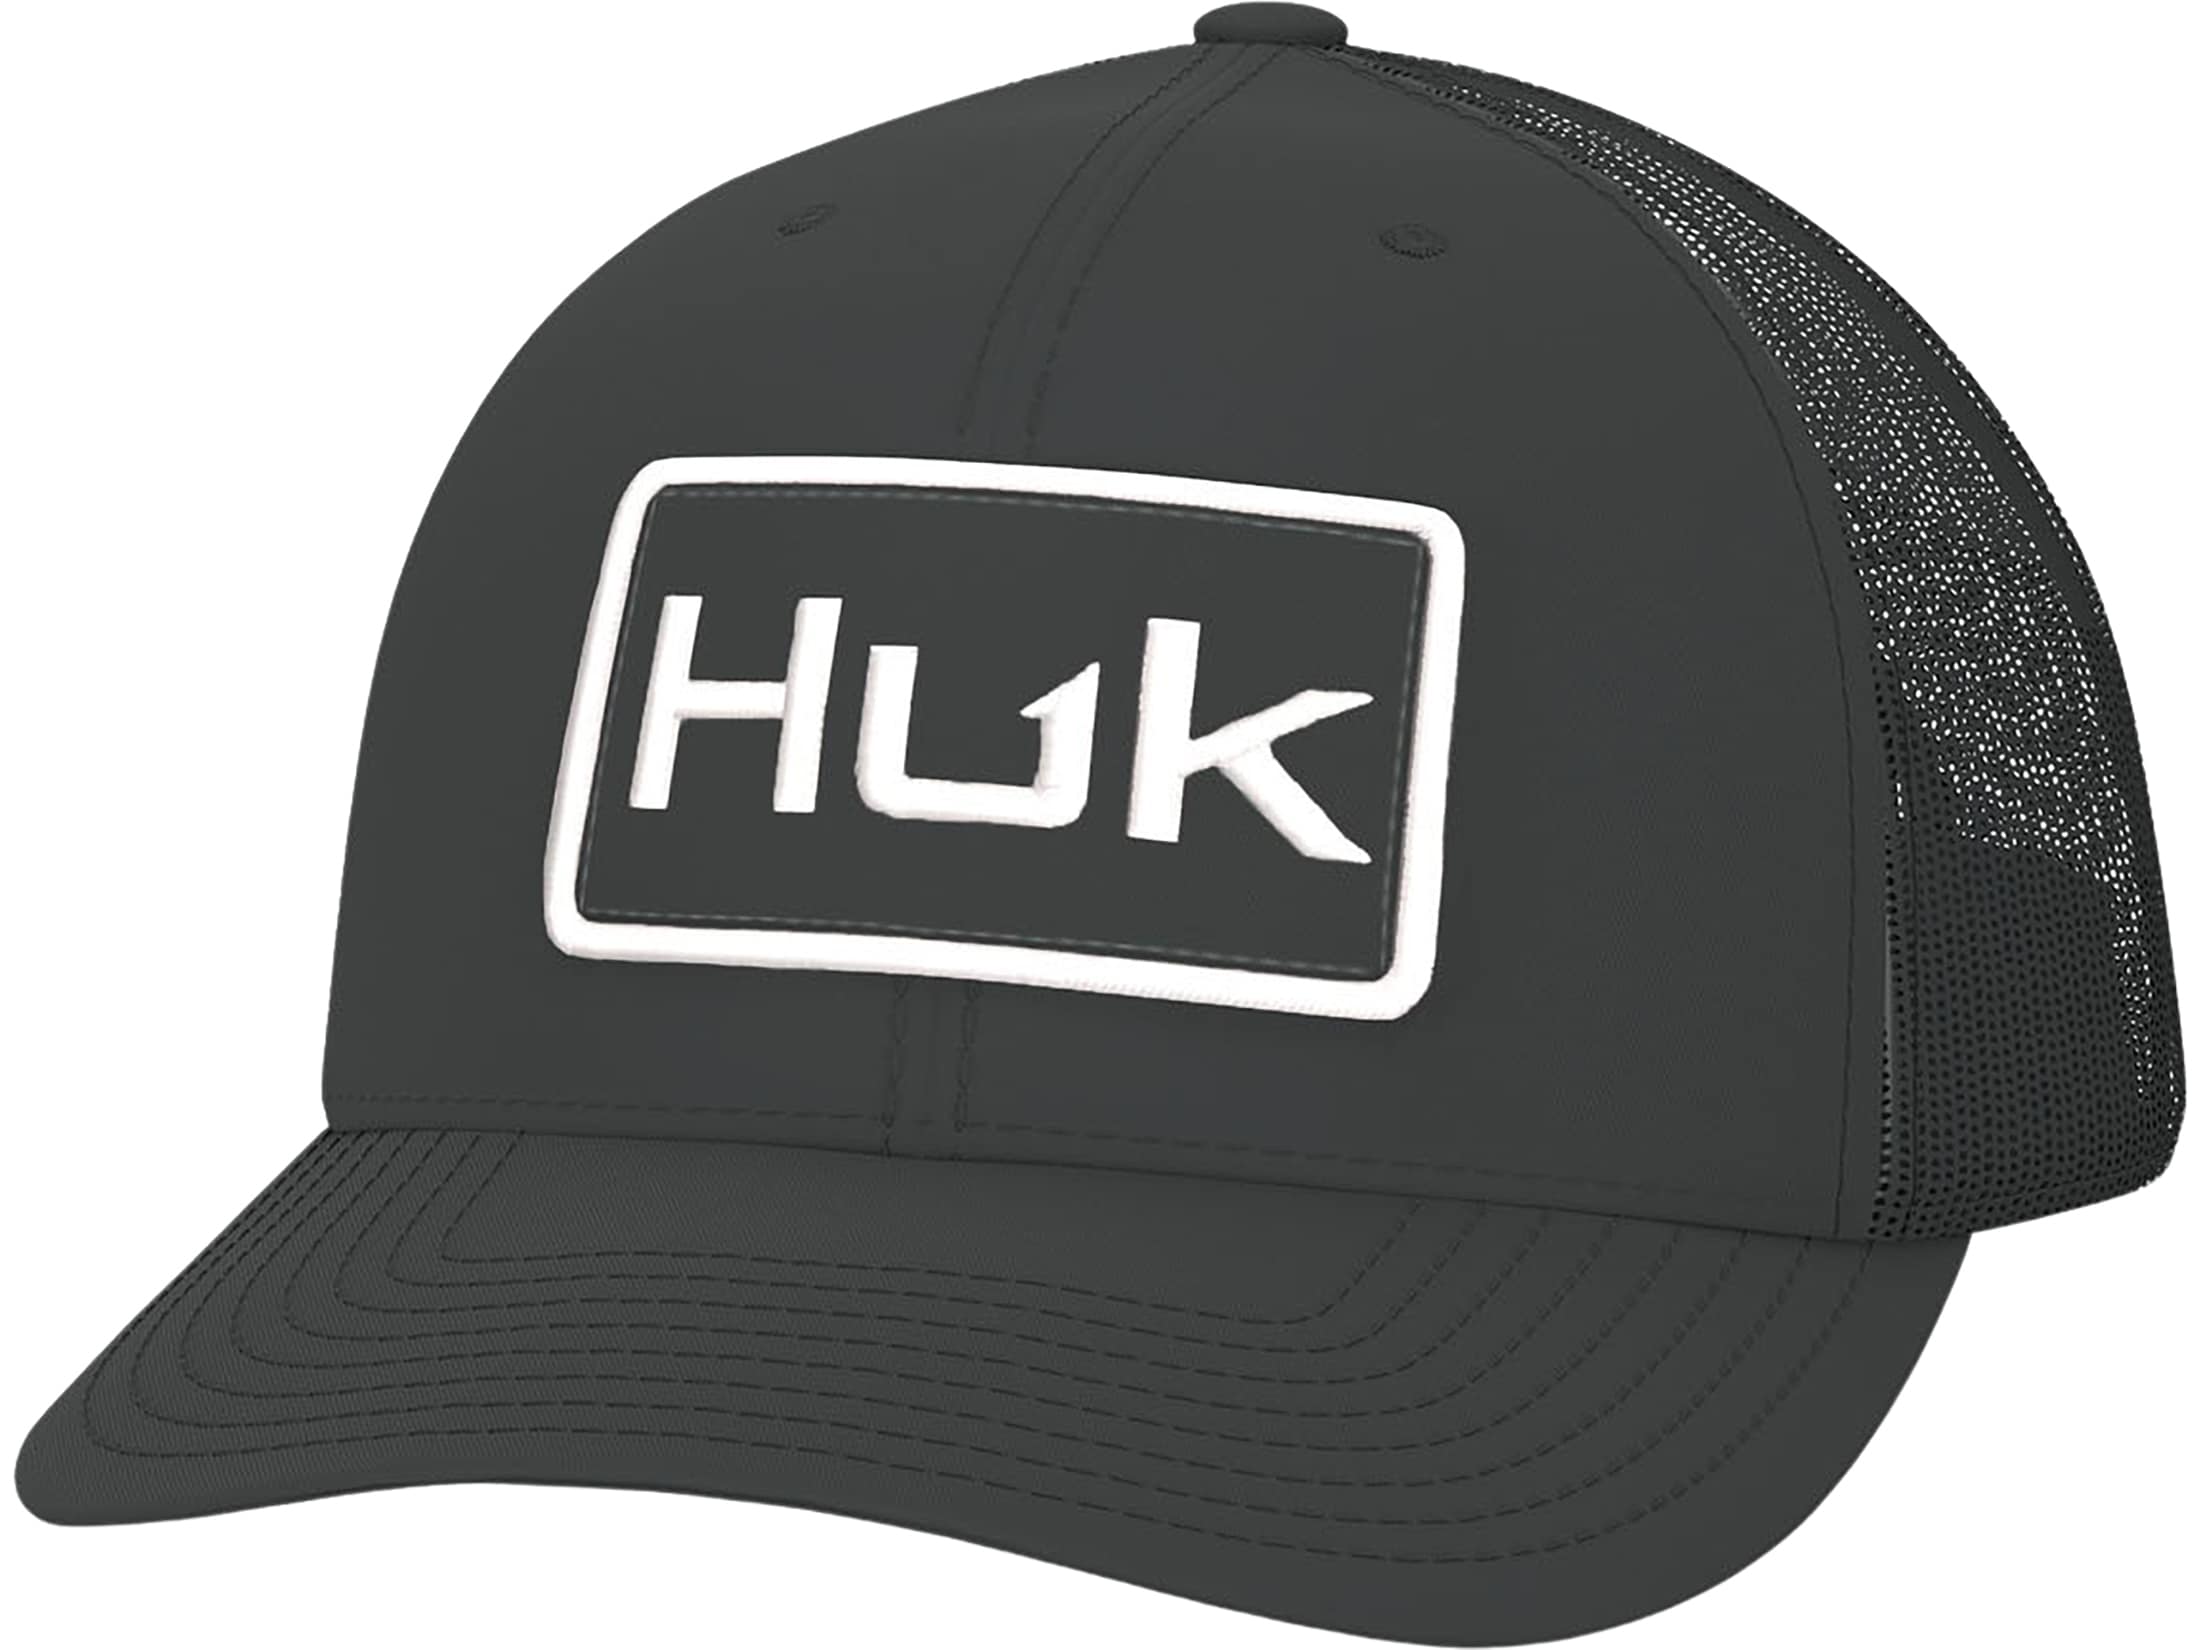 Huk Men's Huk Logo Trucker Hat Black One Size Fits Most